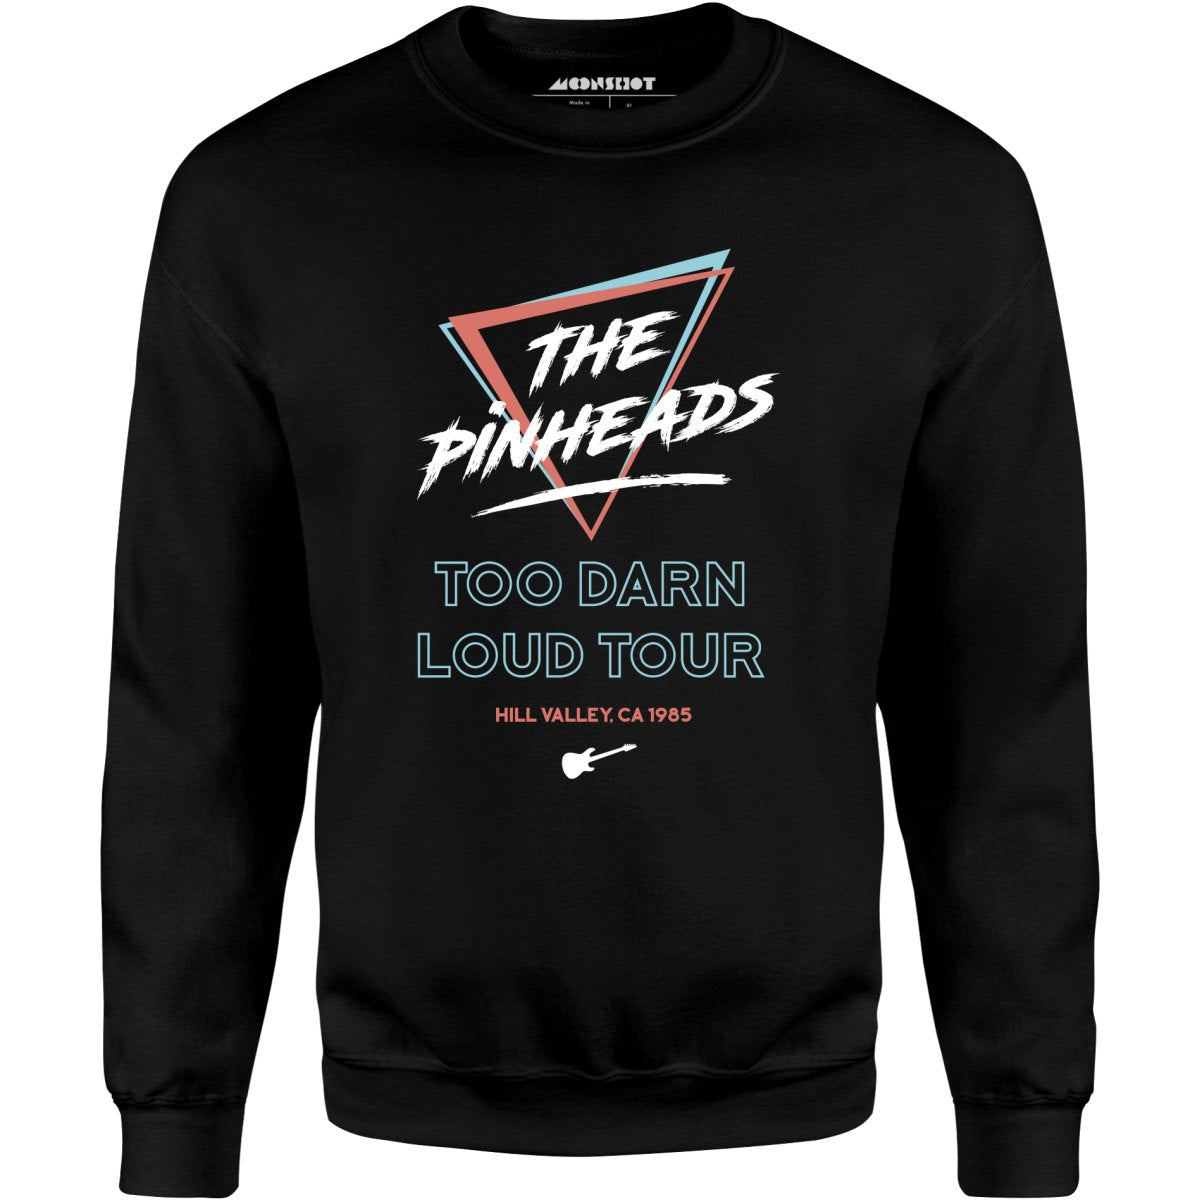 The Pinheads - Too Darn Loud Tour - Unisex Sweatshirt